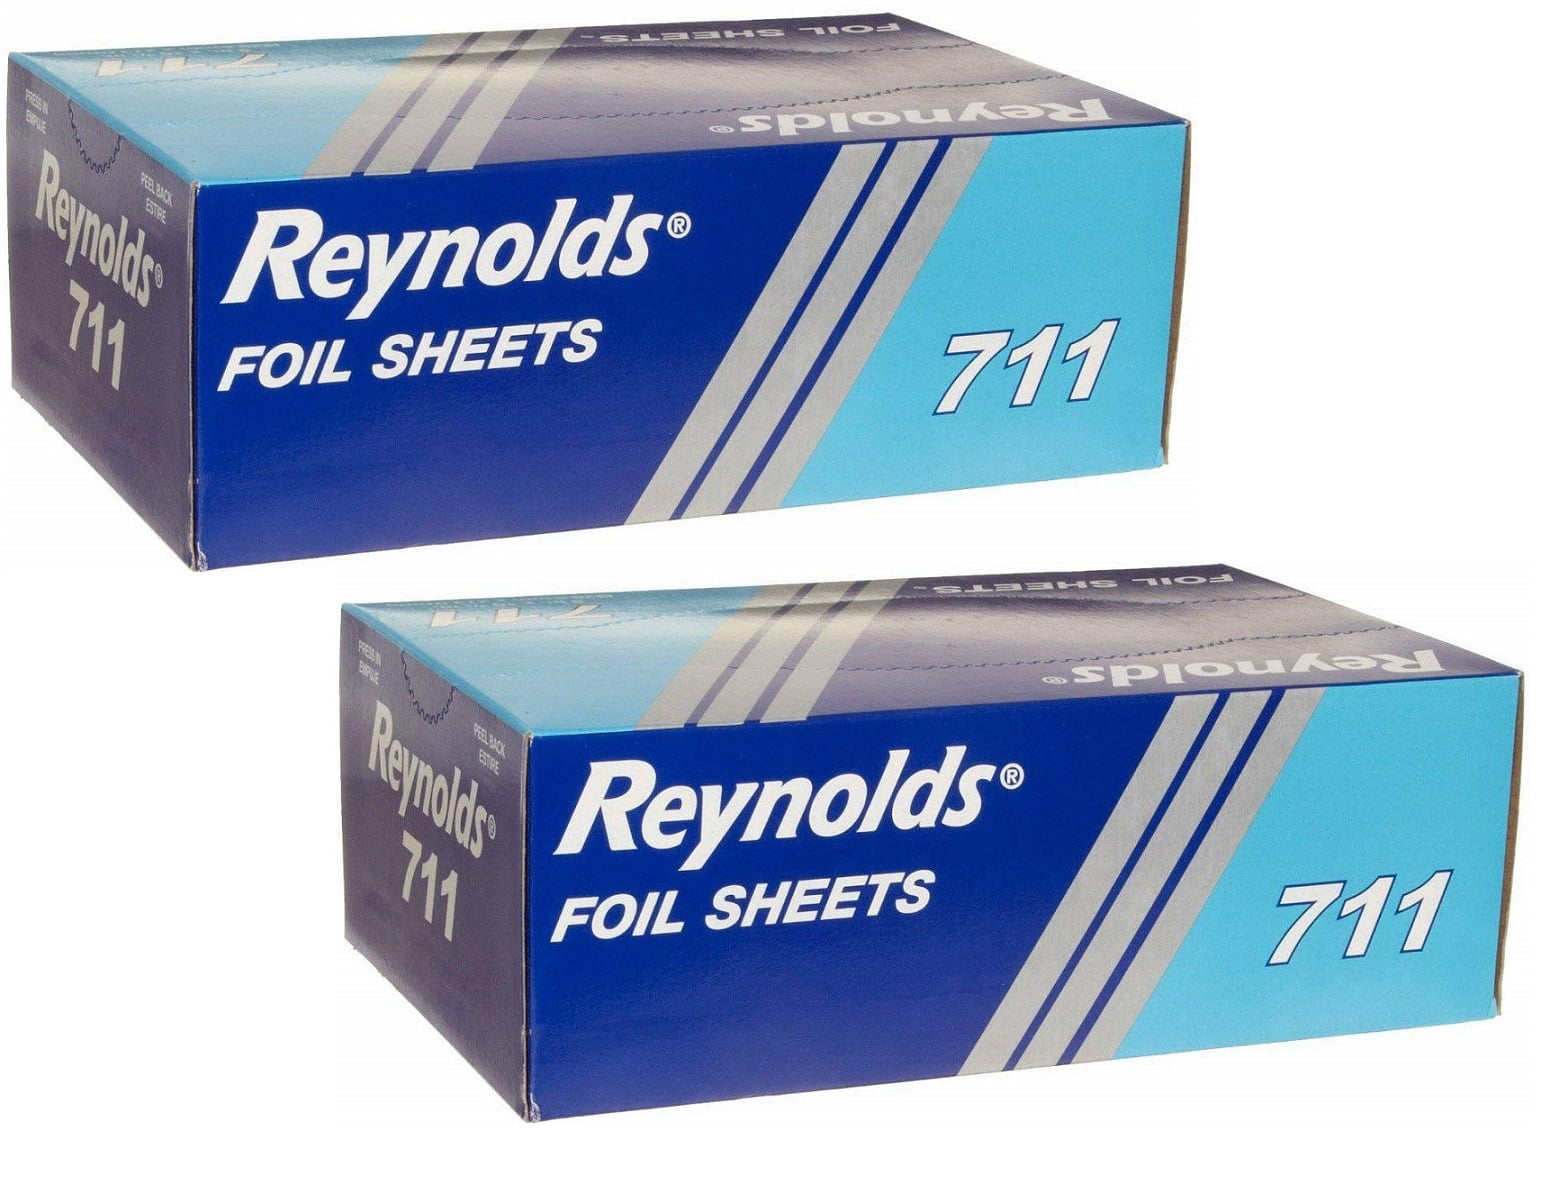 Reynolds Wrappers Pre-Cut Aluminum Foil Sheets, 12x10.75 Inches, 500 Sheets  Foil Sheets - 500 Count 25.99 - Quarter Price